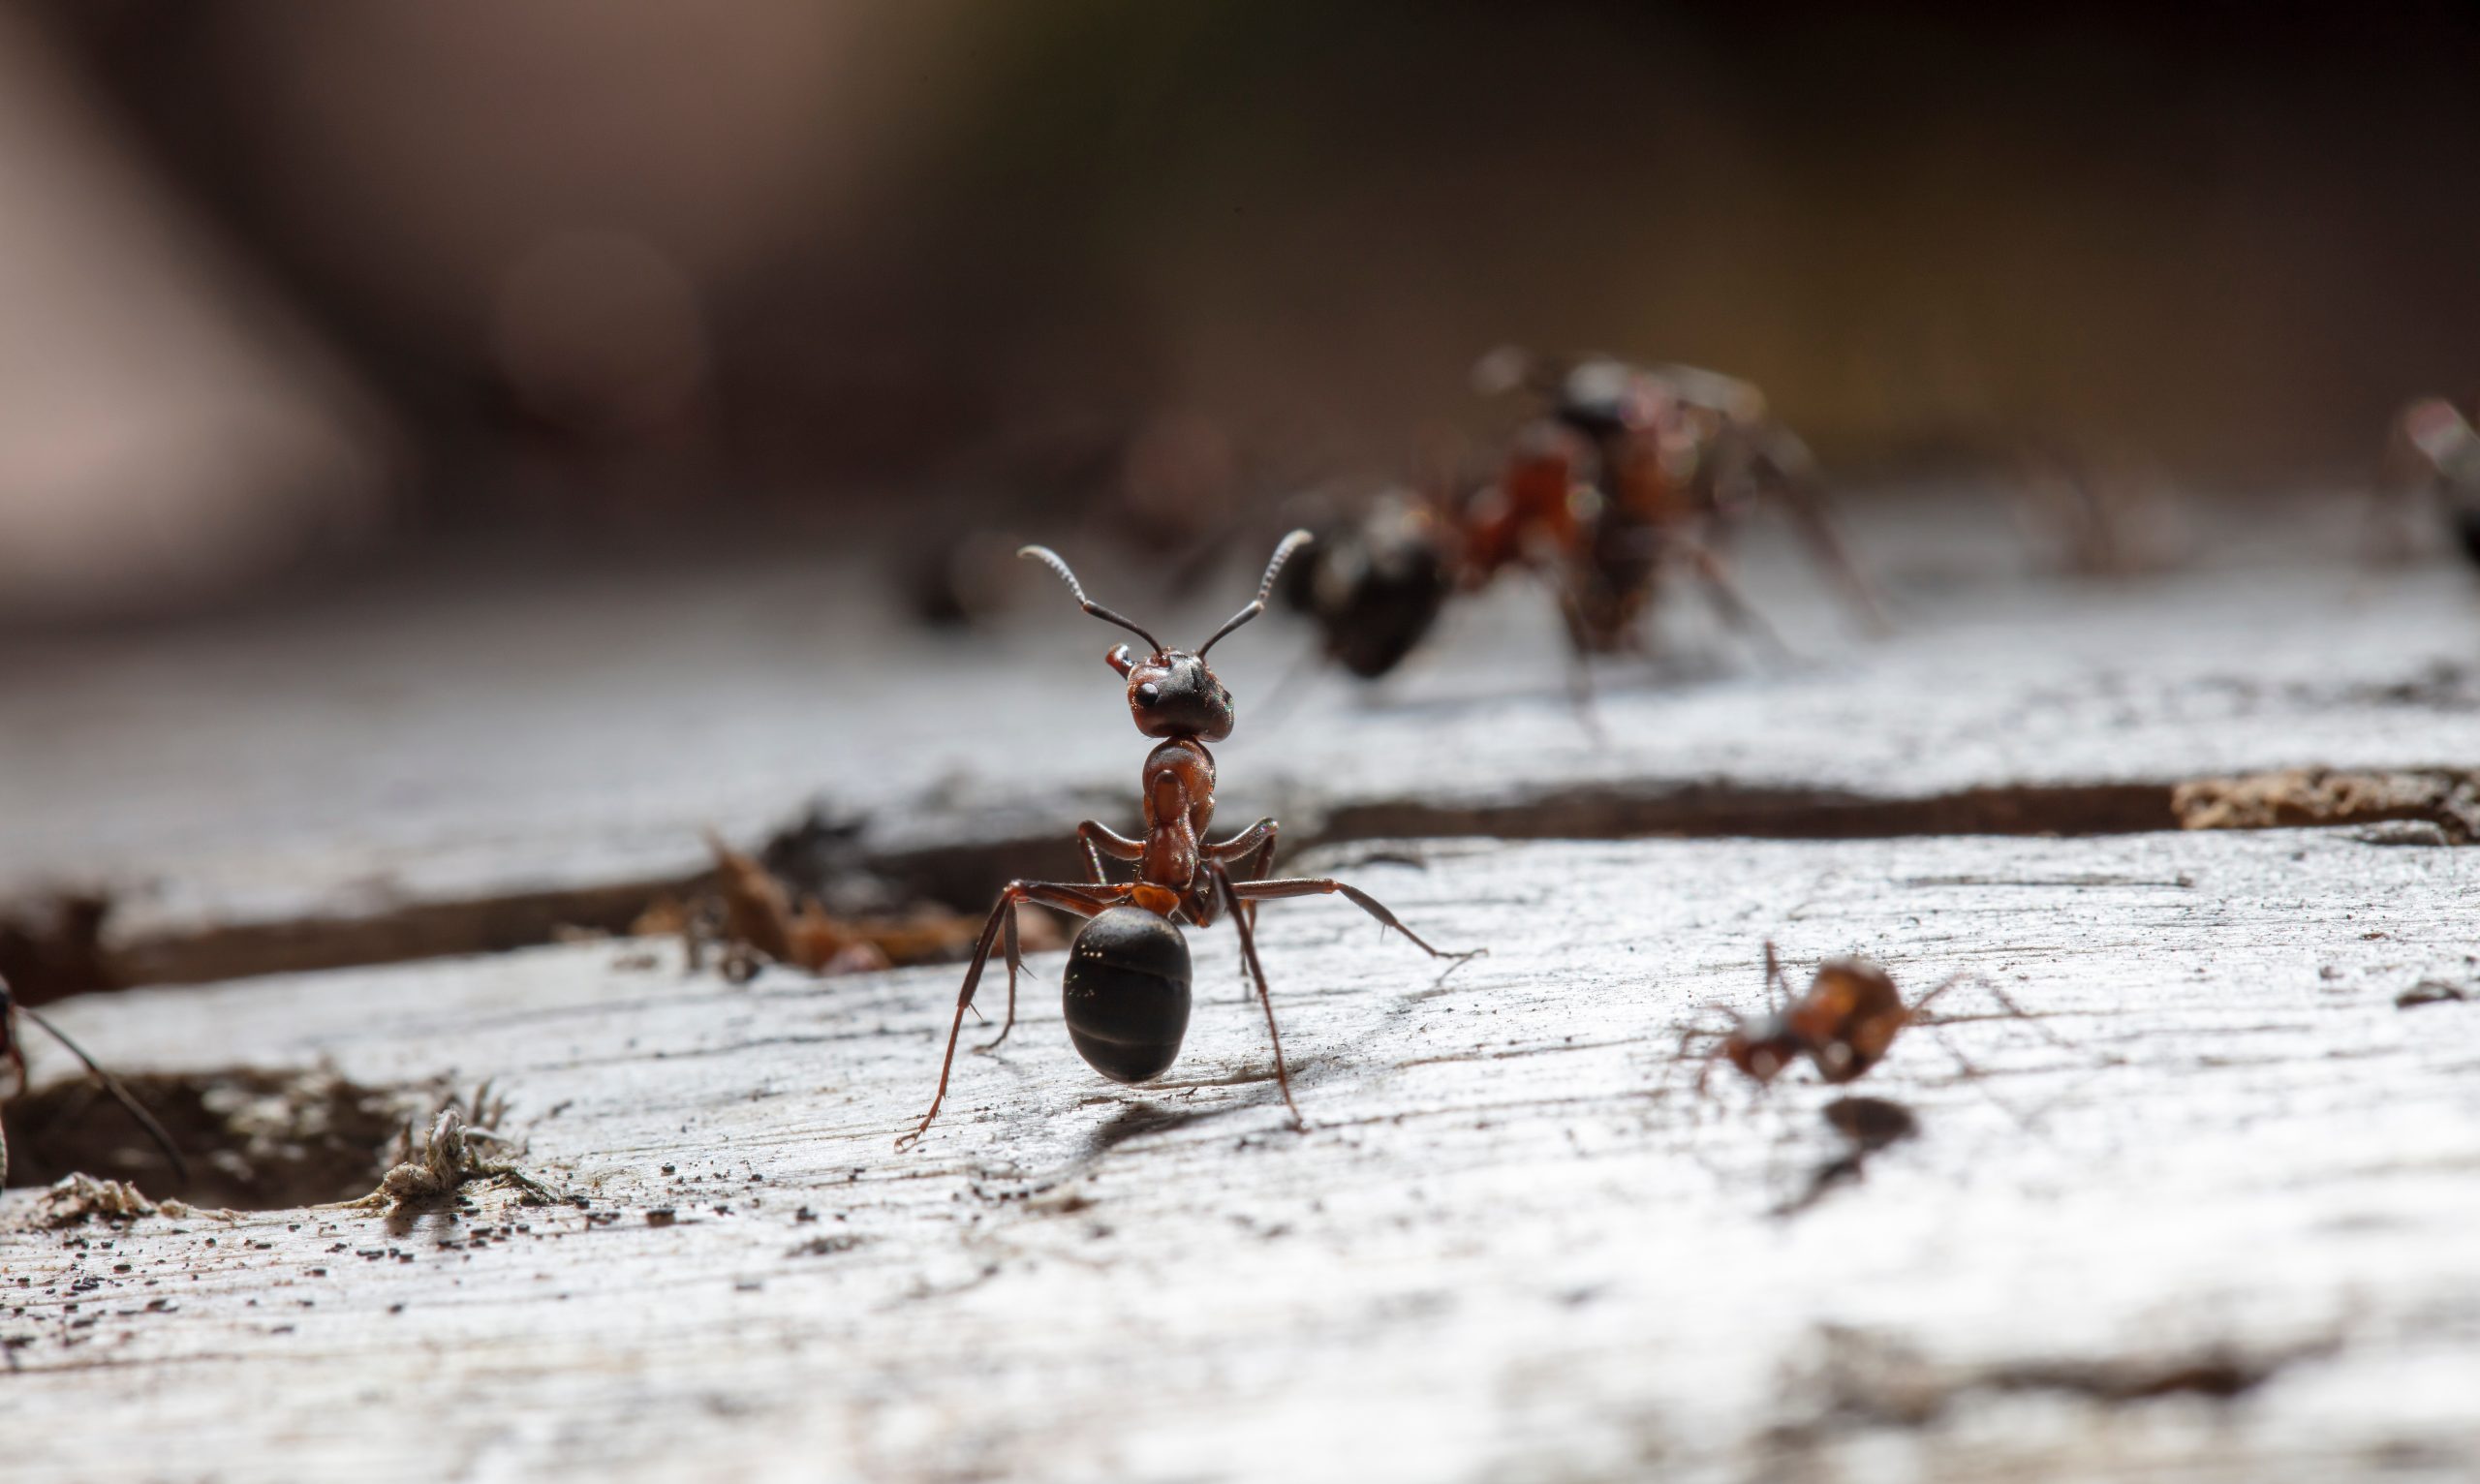 faq - Does Birch Fumigators offer carpenter ant pest control in Beaumont?